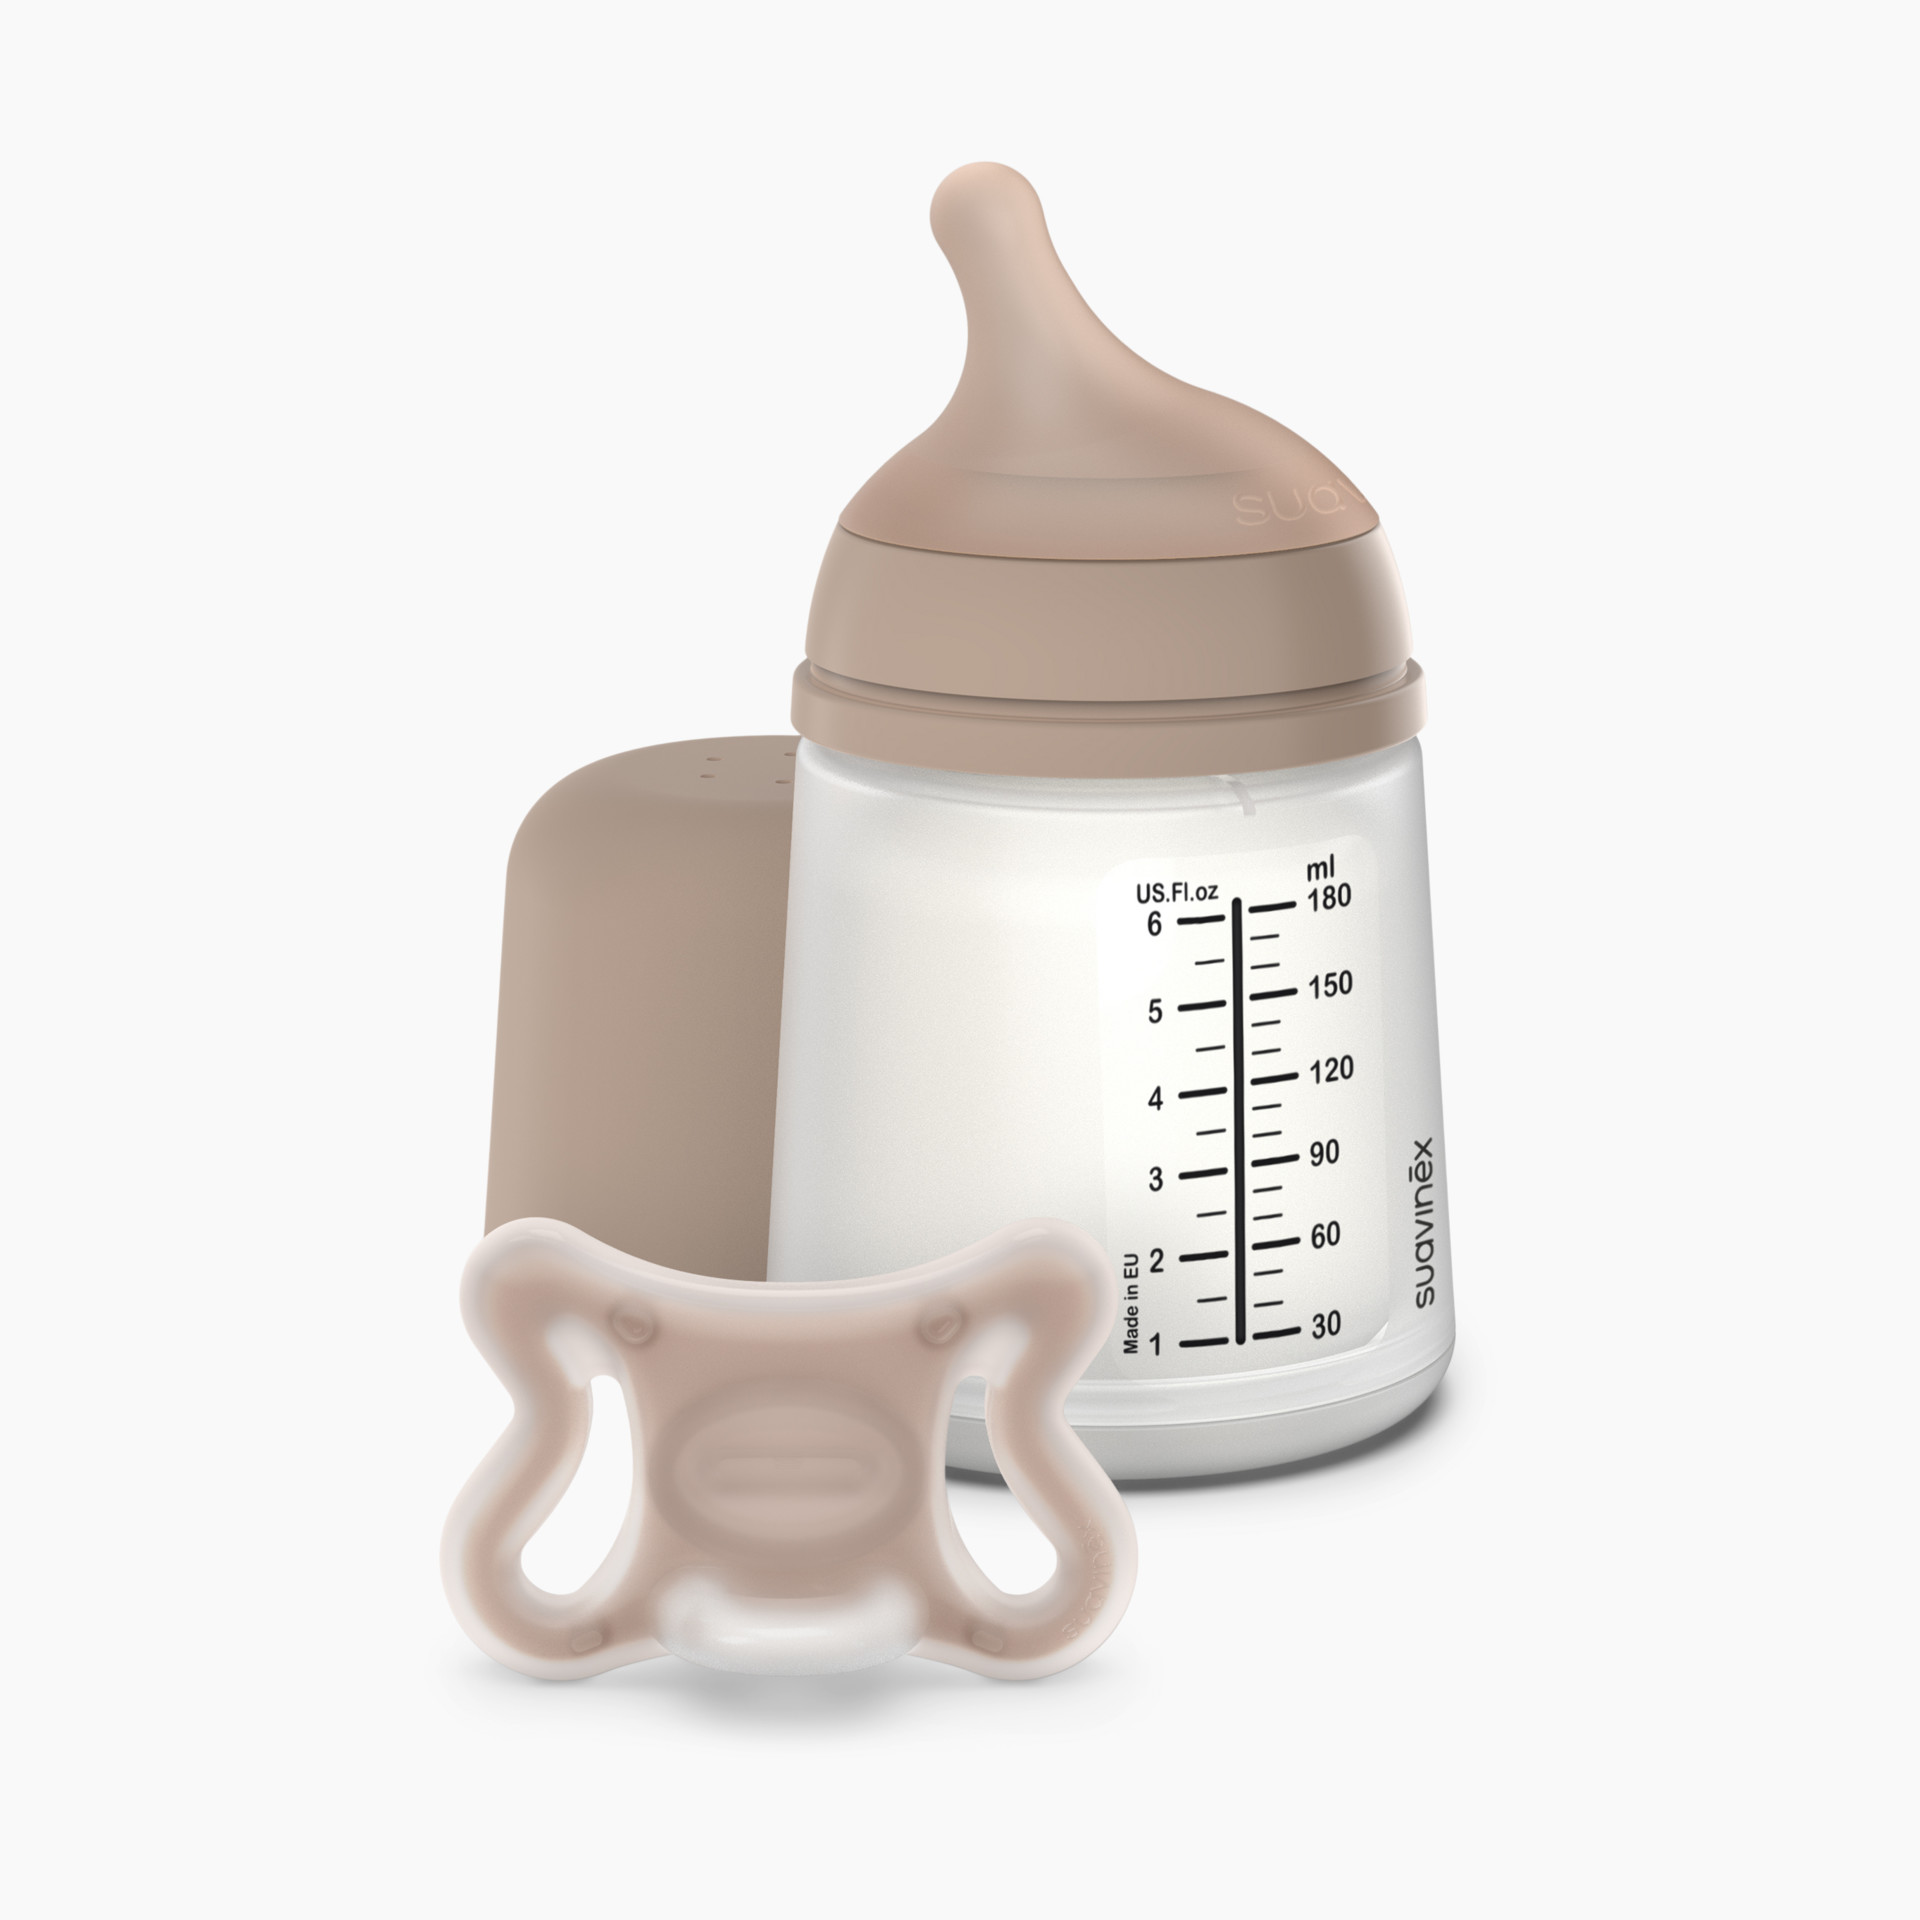 Suavinex Zero Zero Special Breastfeeding Bottle 180ml One Size